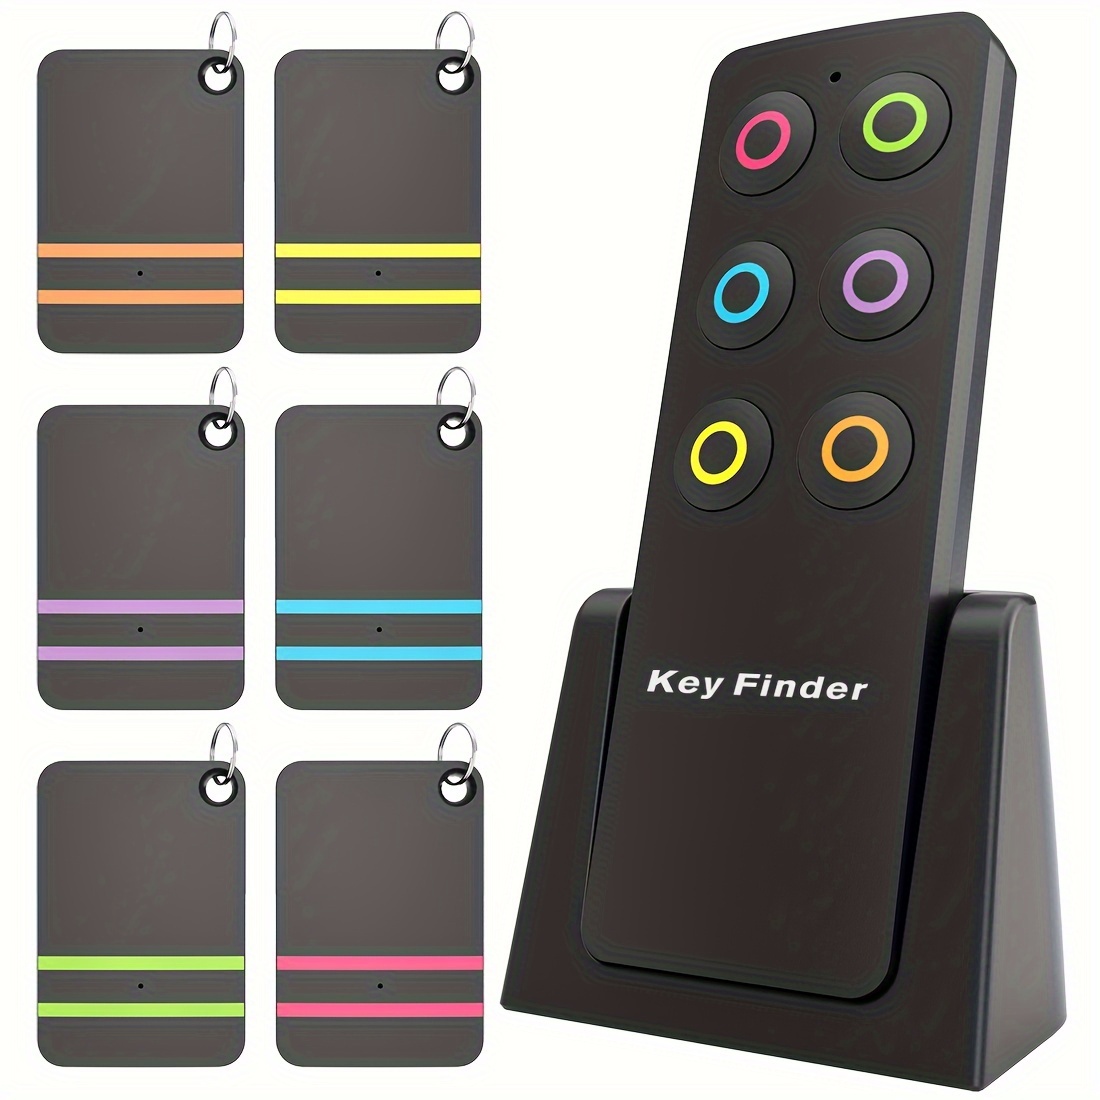 Key Finder,wireless Rf Locator Locator With Working Range,key